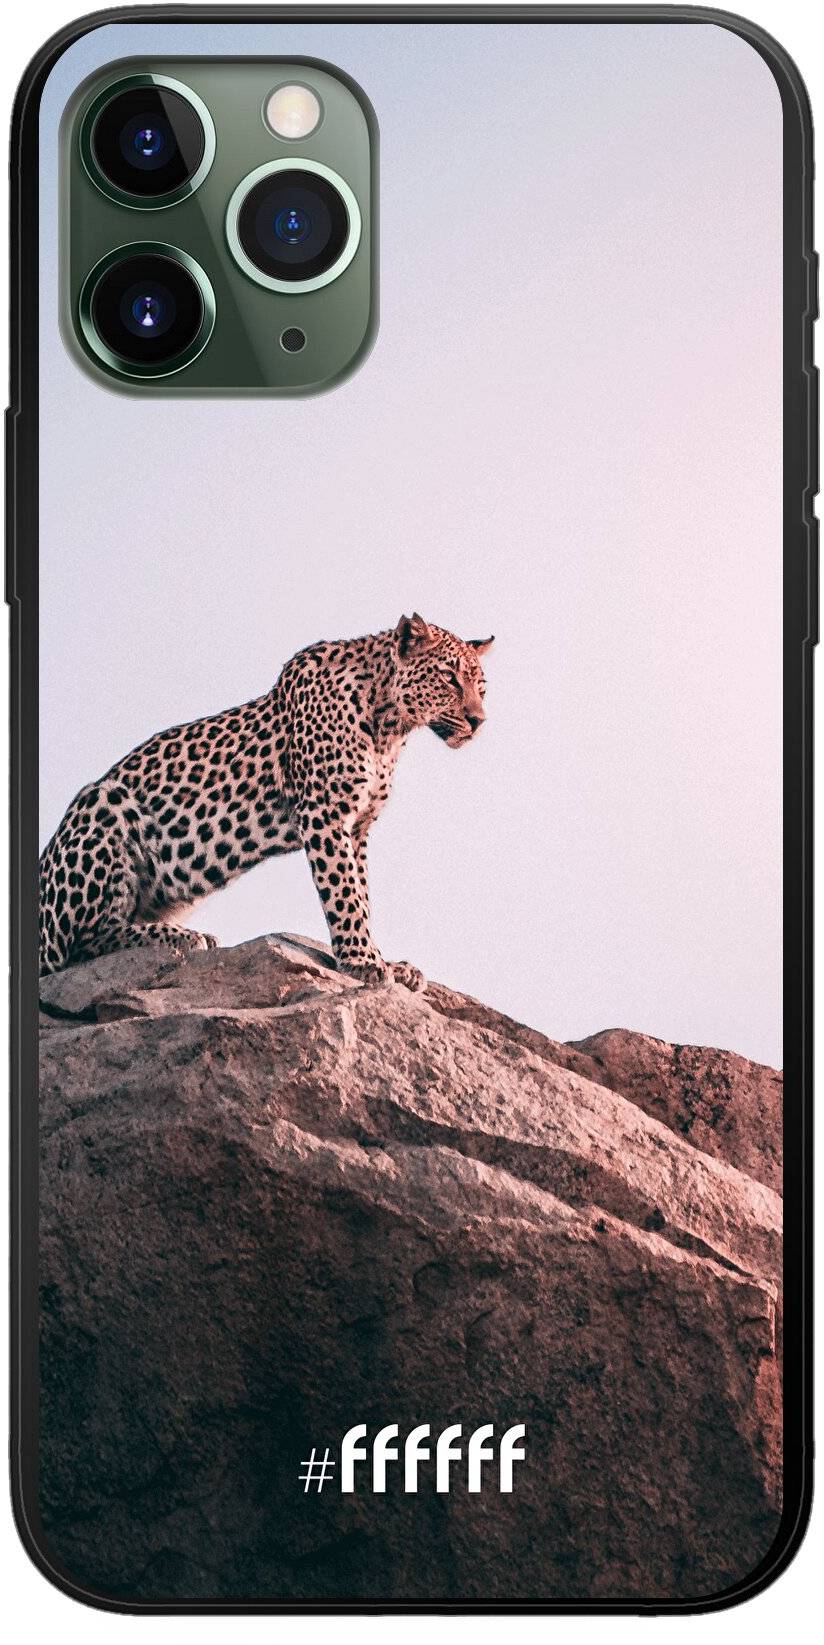 Leopard iPhone 11 Pro